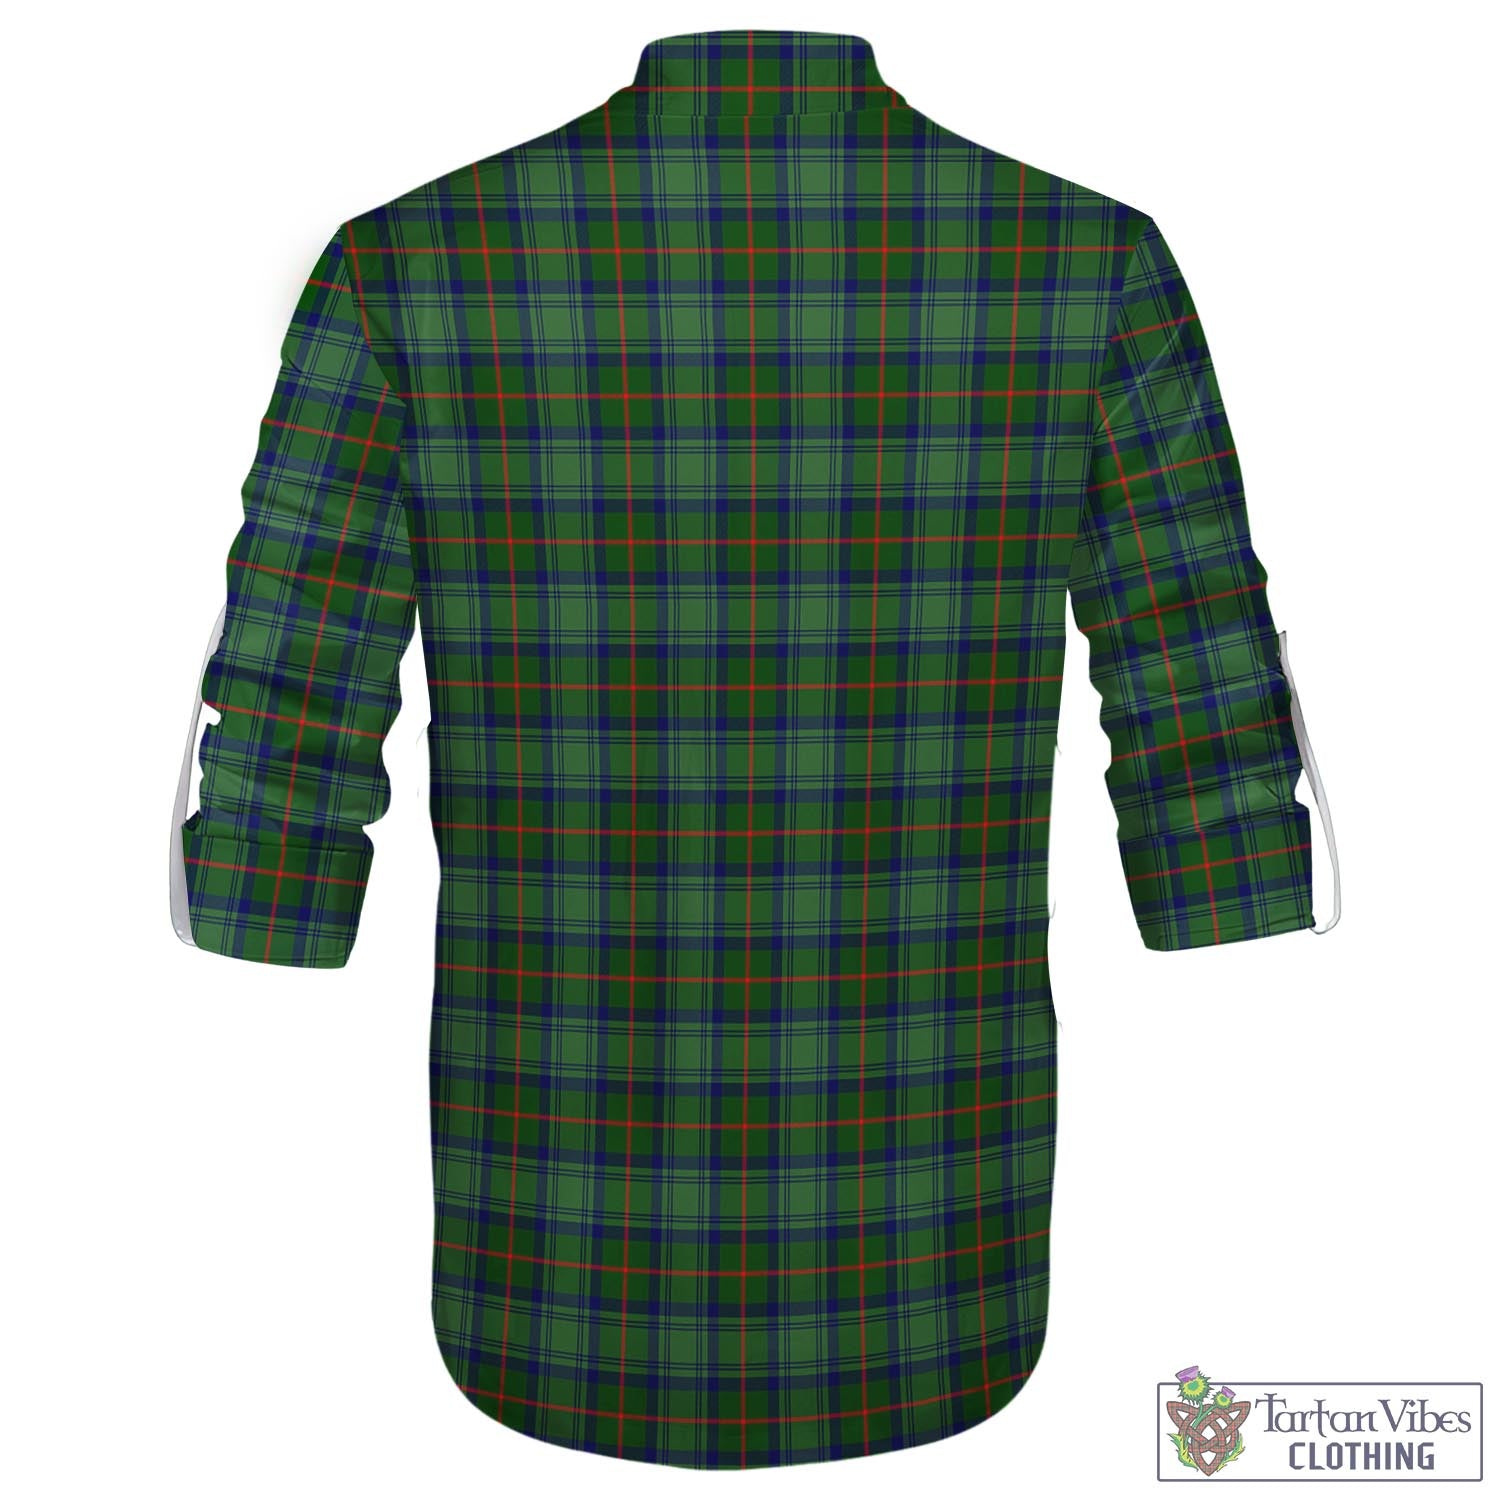 Tartan Vibes Clothing Cranstoun Tartan Men's Scottish Traditional Jacobite Ghillie Kilt Shirt with Family Crest